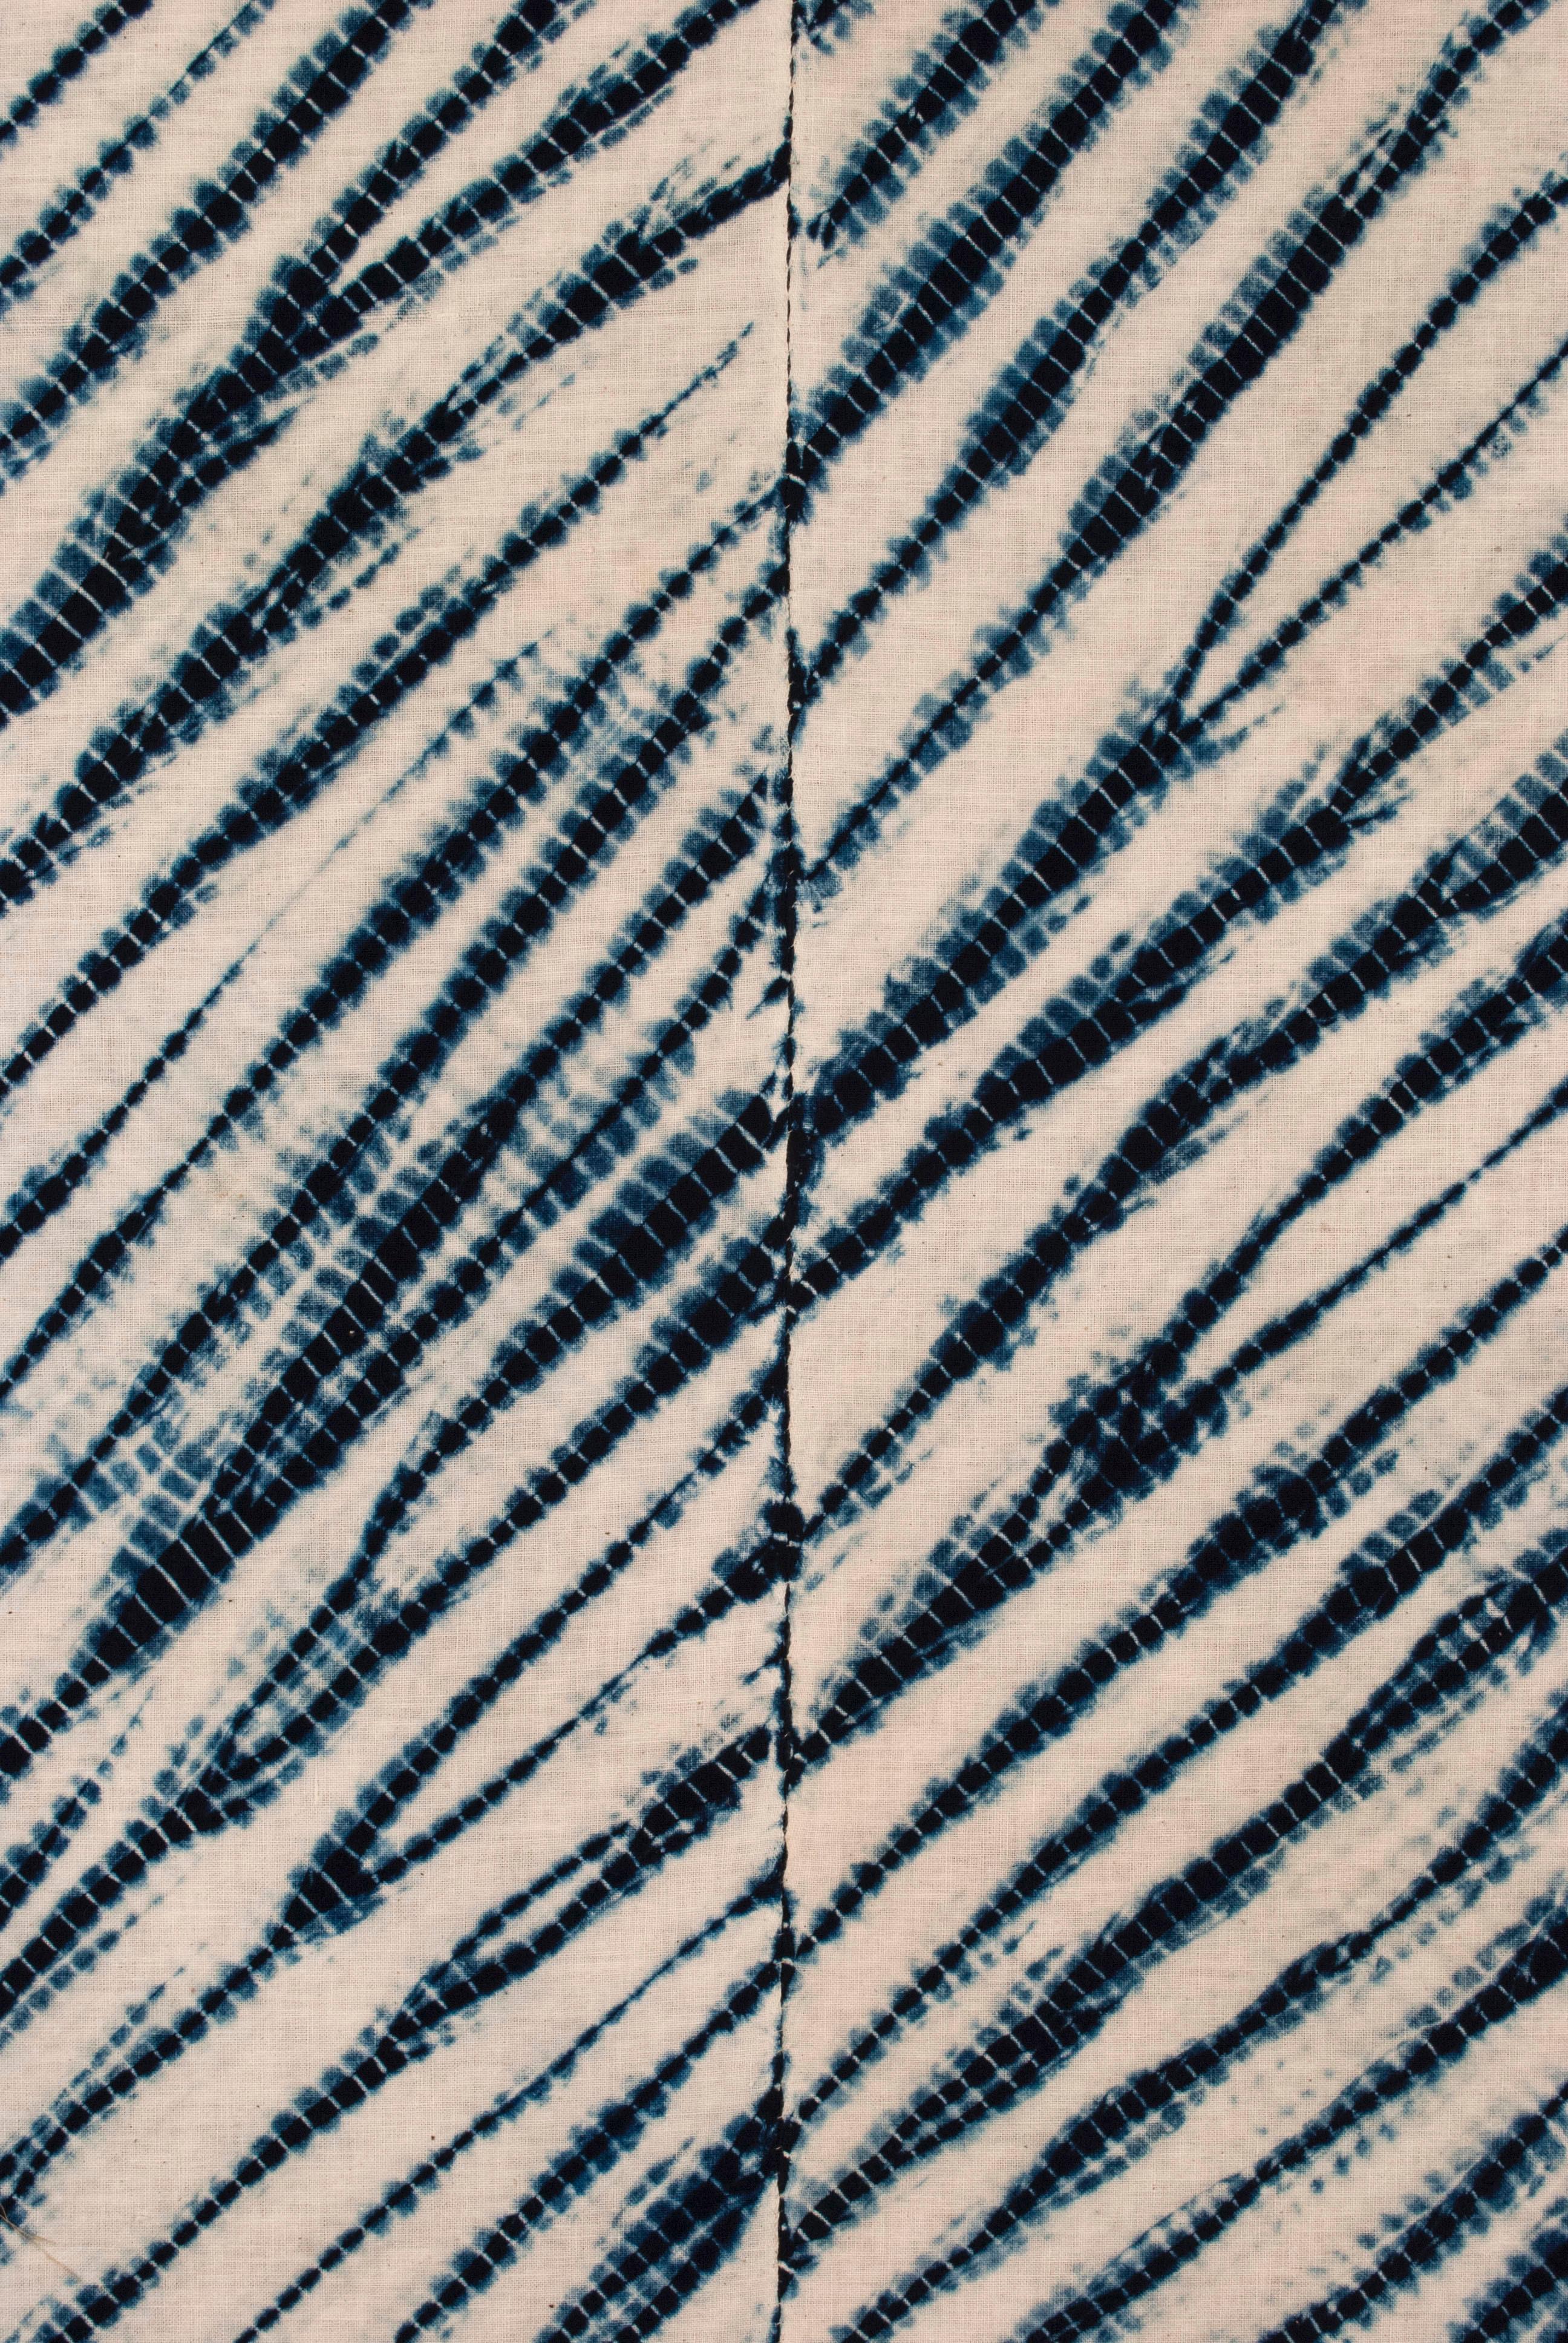 Early 20th Century Japanese two-panel shape-resist dyed textile / Arashi shibori

A graphic example of Japanese shibori. Two panels of hand-spun cotton dyed with natural indigo using the shibori technique known as ‘arashi’ shibori (pole-wrapping).